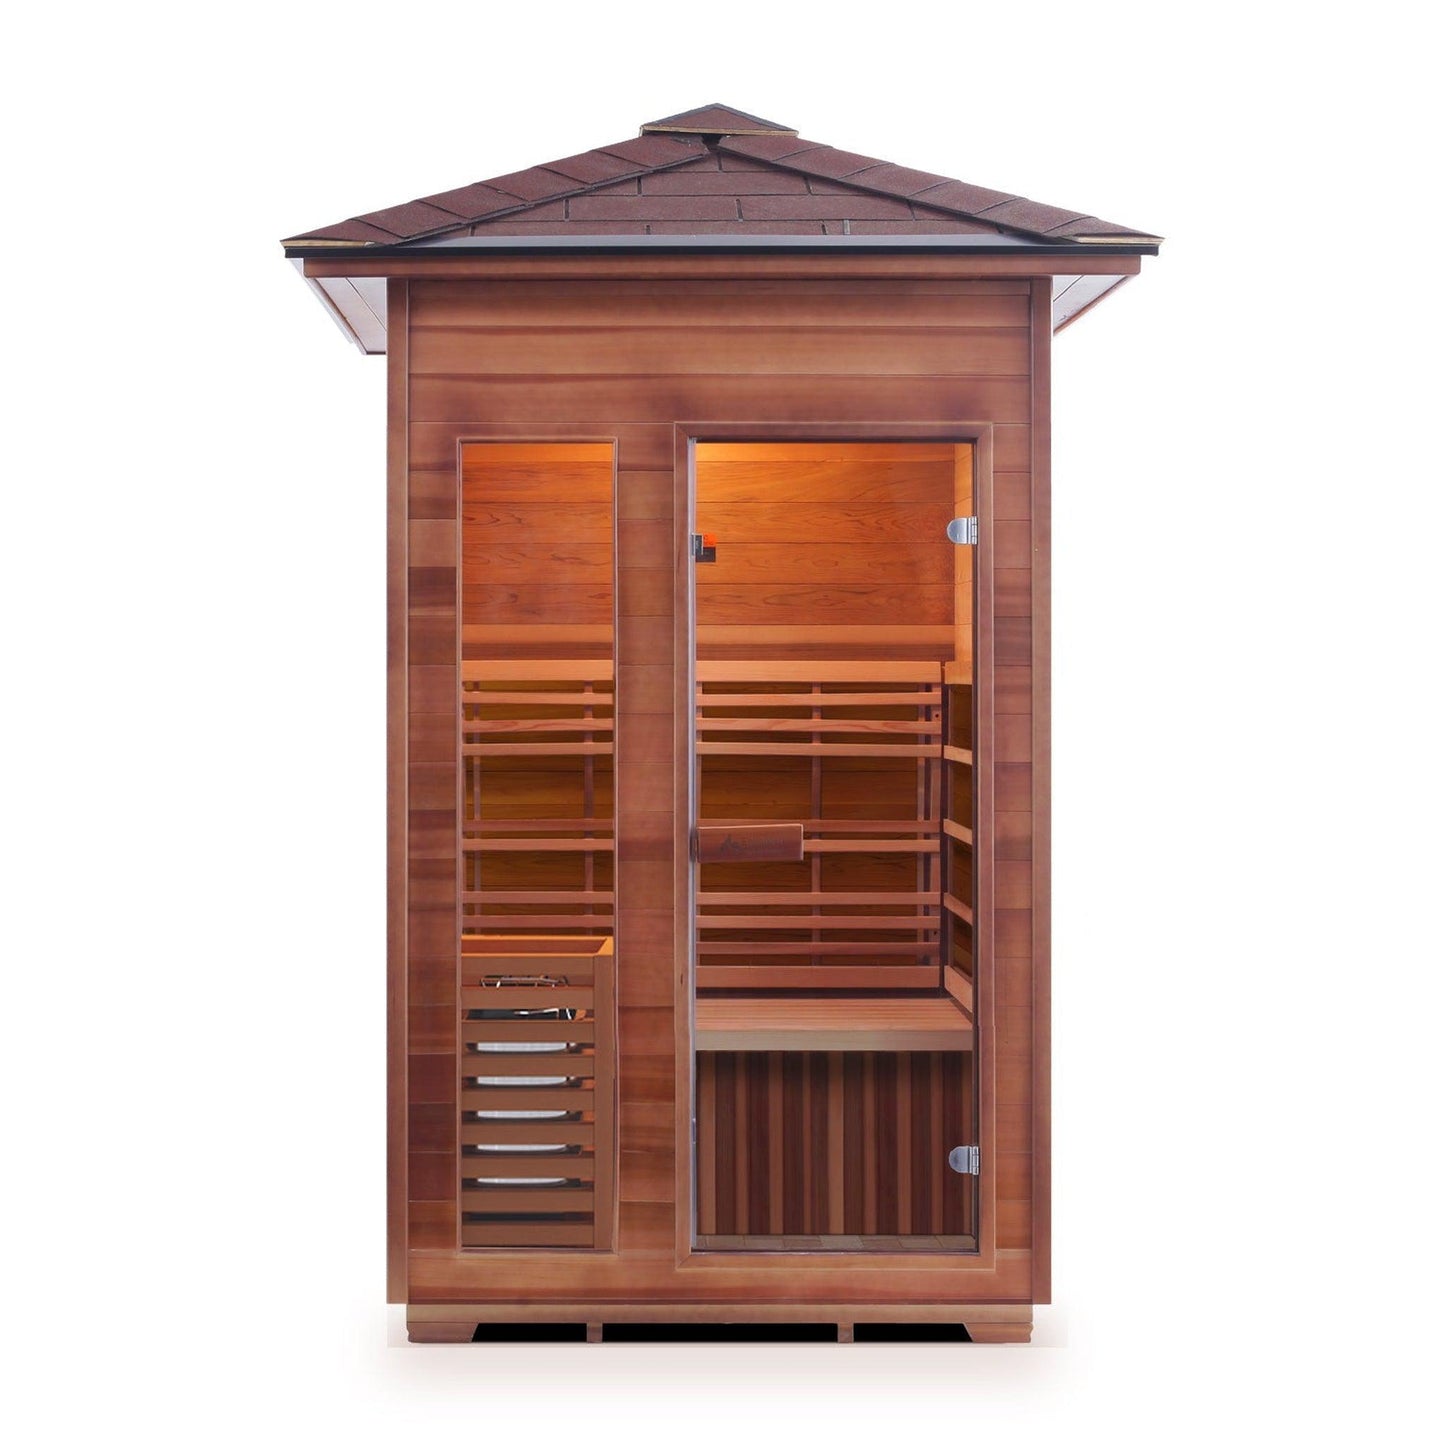 Enlighten SaunaTerra SunRise 2-Person Peak Roof Dry Traditional Outdoor Sauna